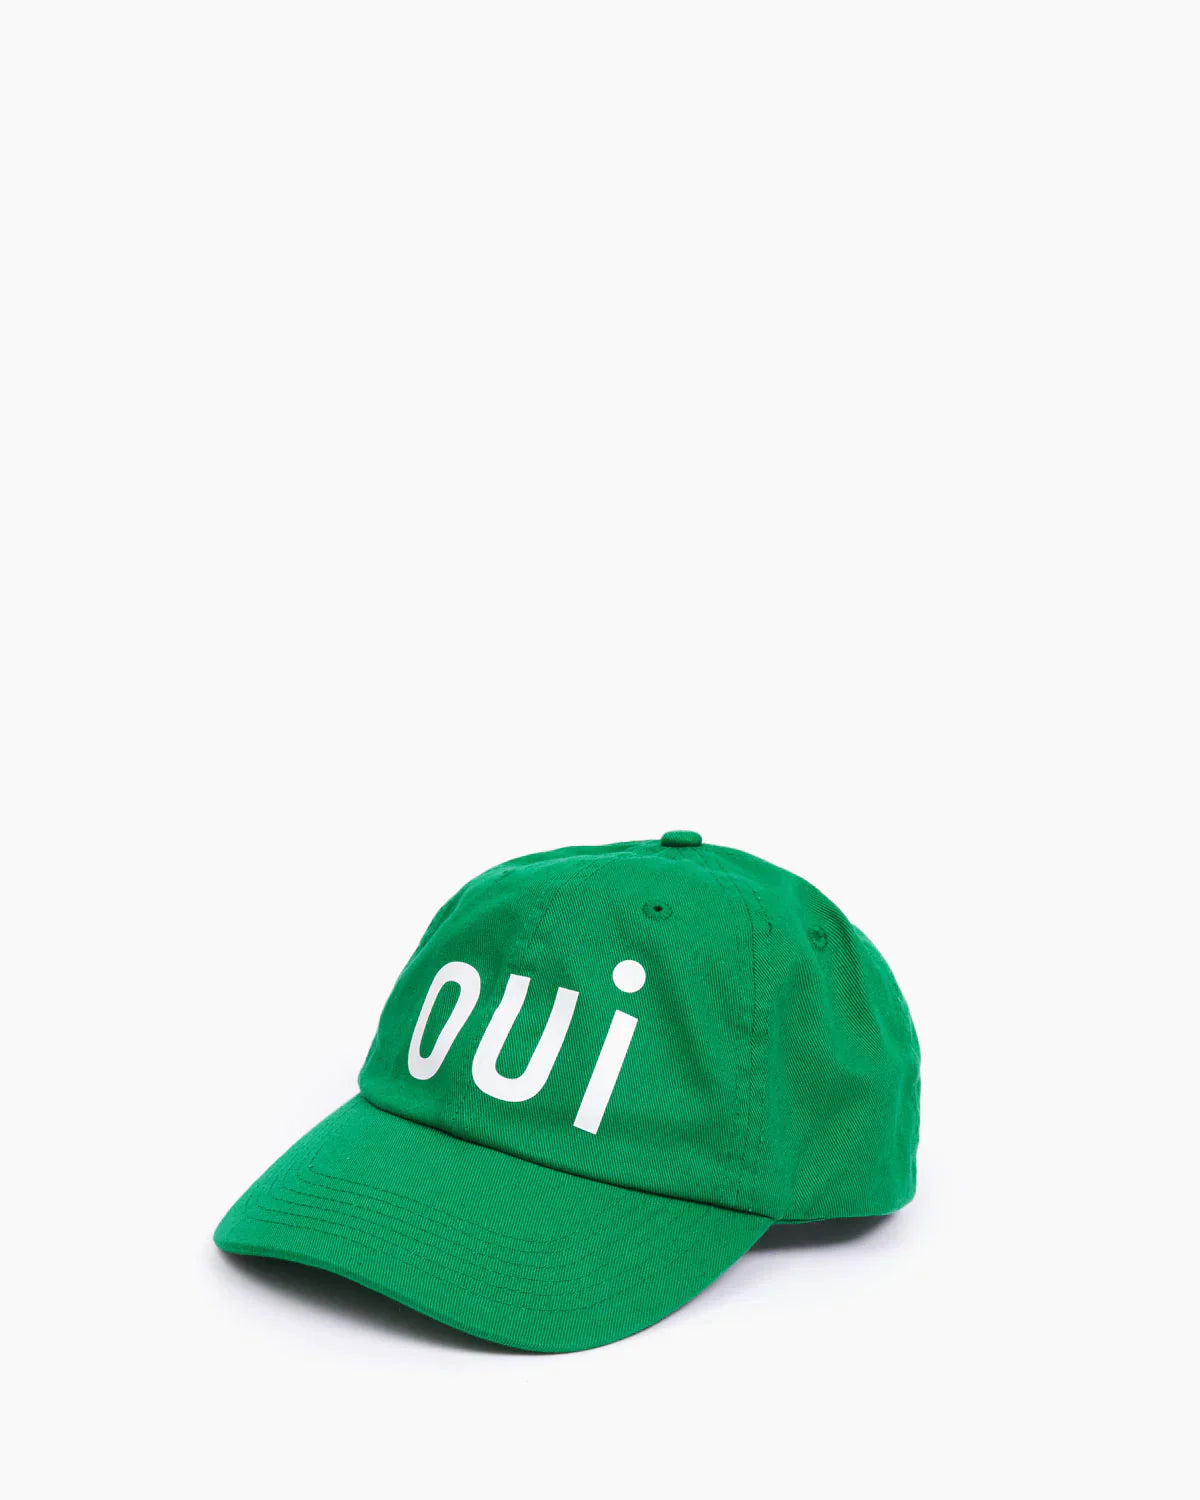 Clare V Baseball Hat, Green w/ Cream Oui